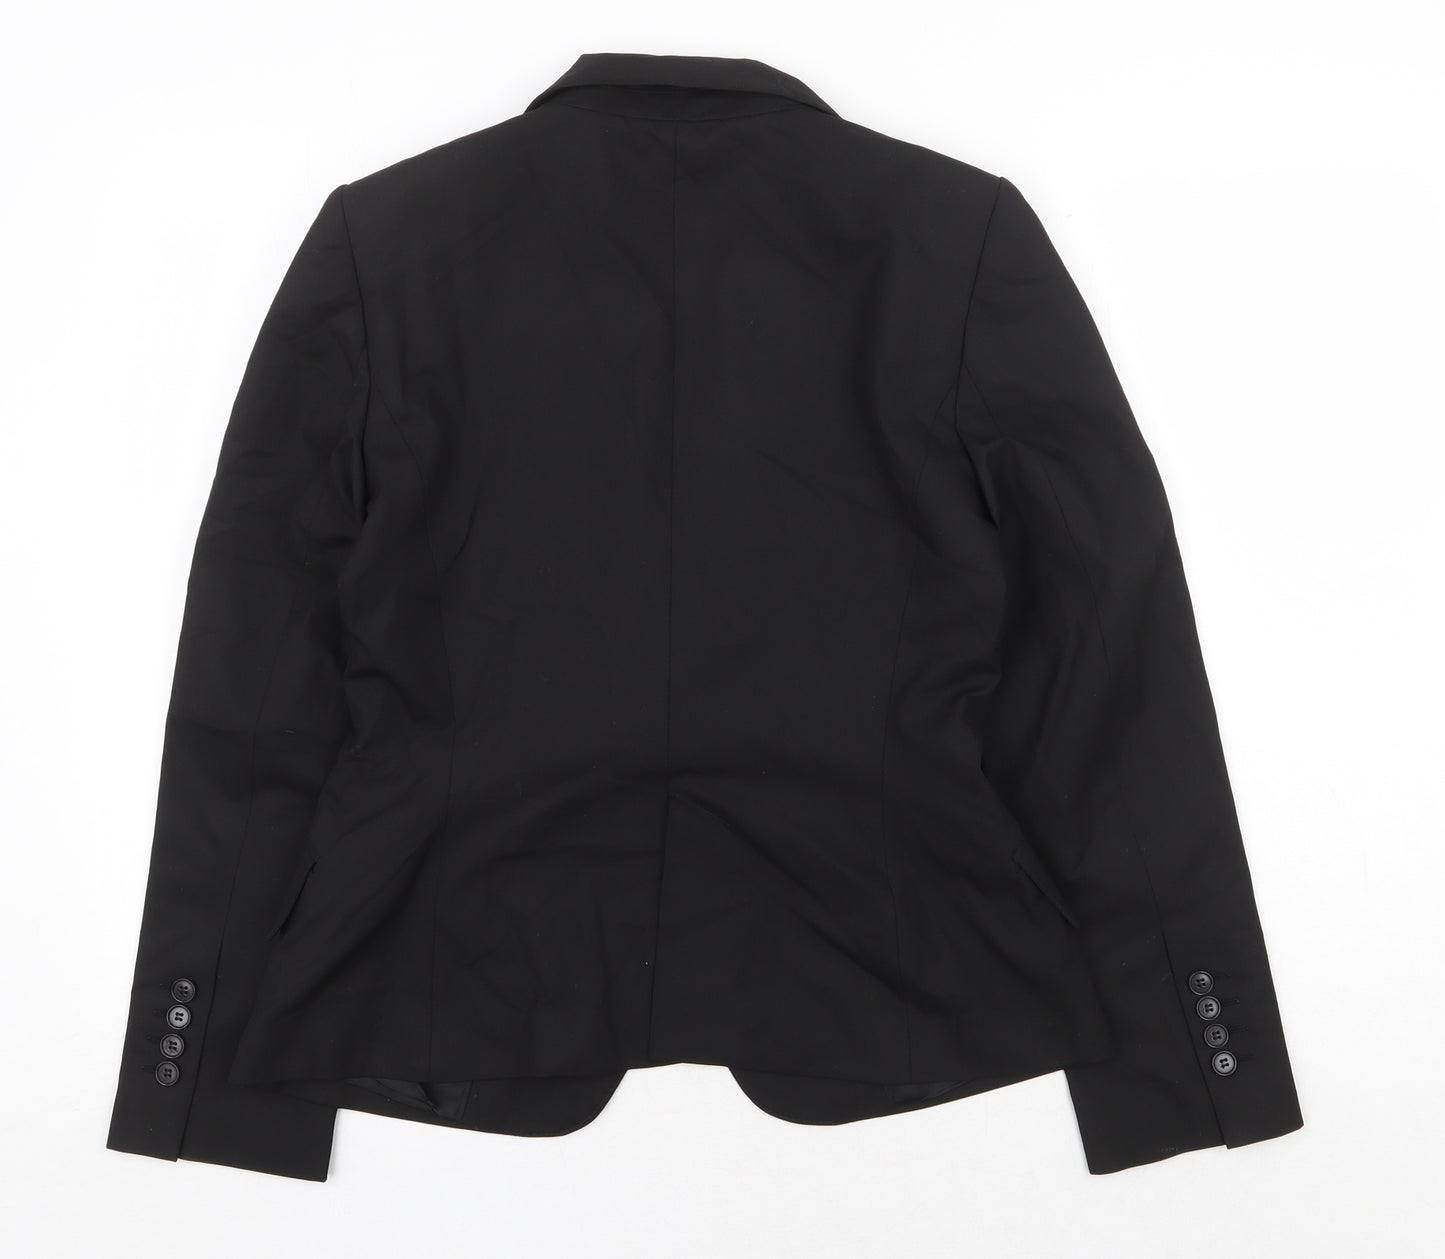 Zara Womens Black Polyester Jacket Suit Jacket Size 12 Button